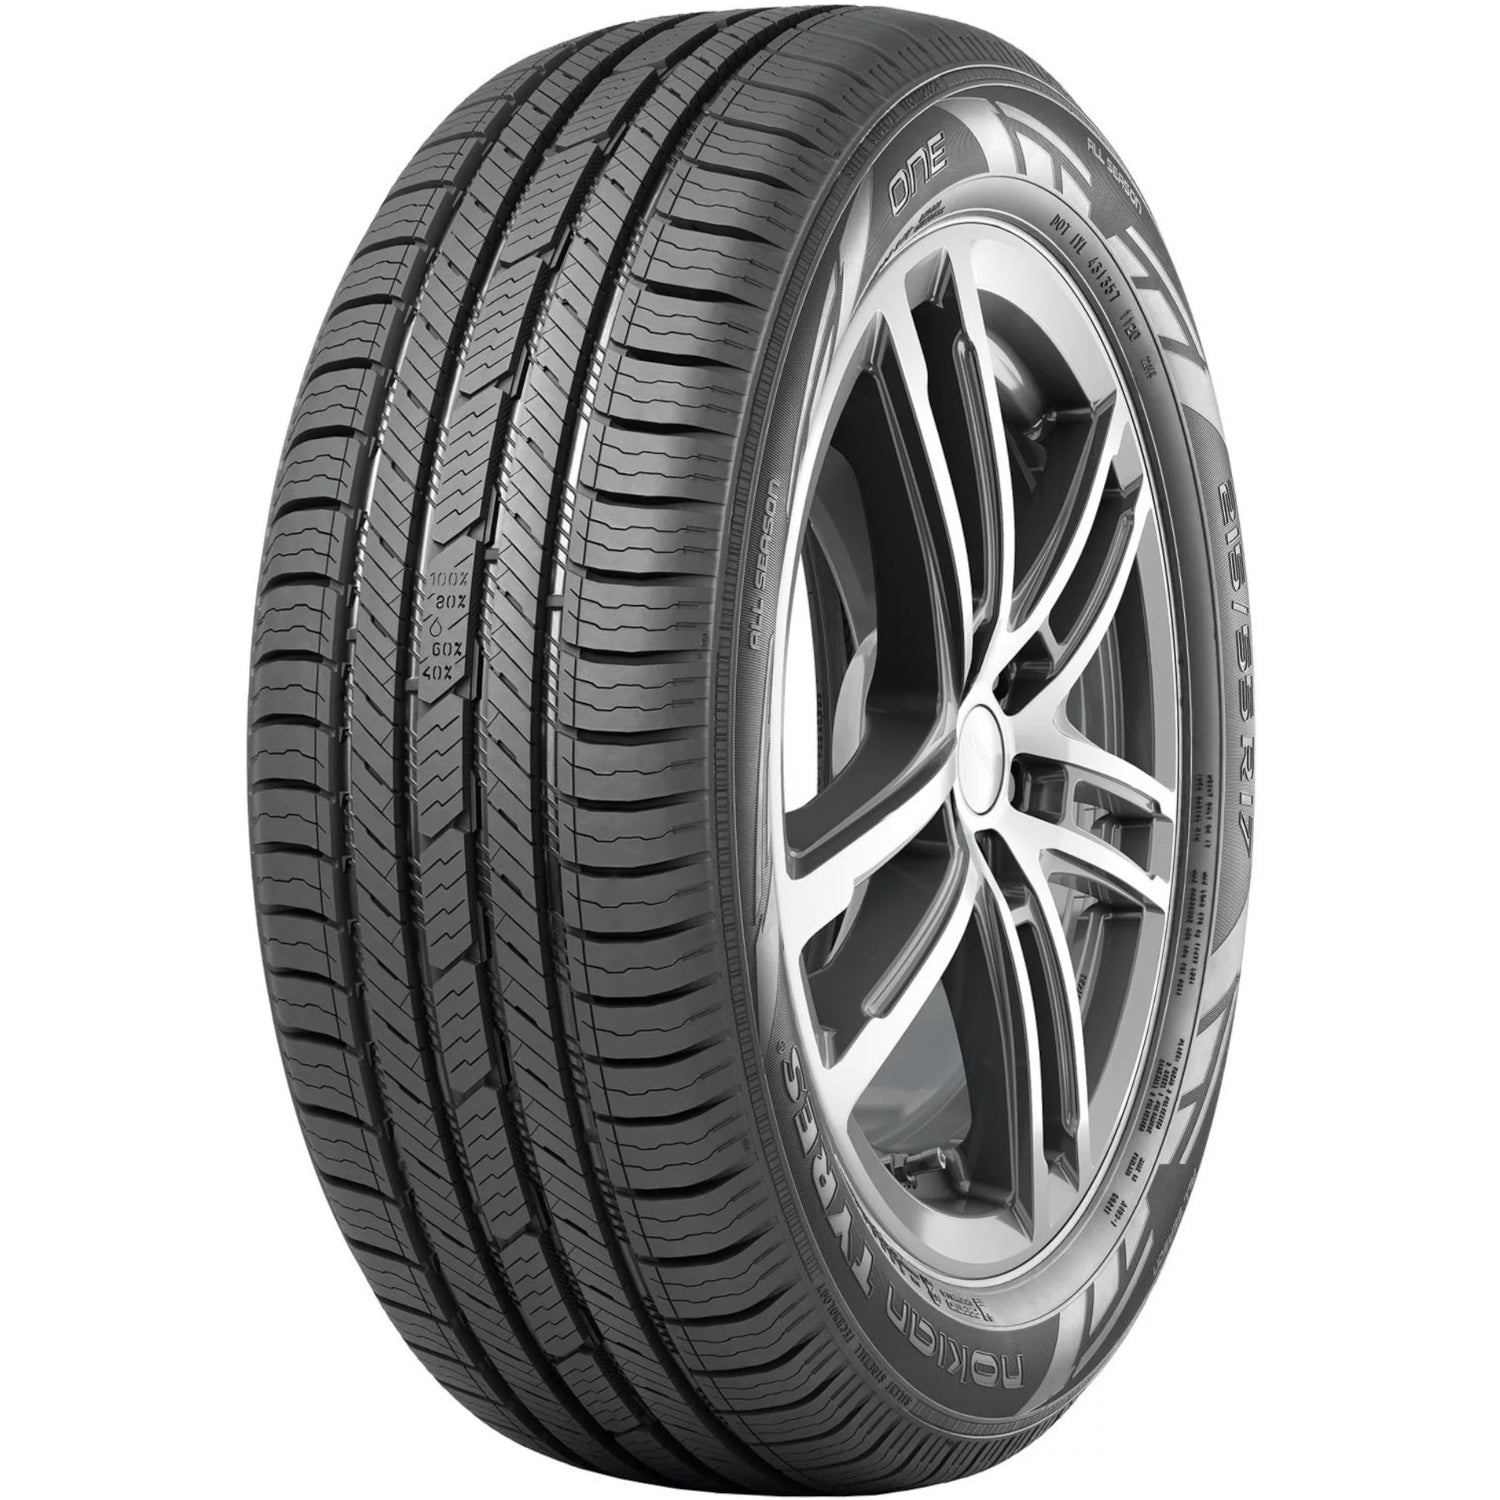 NOKIAN ONE 235/65R17 (29.1X9.3R 17) Tires